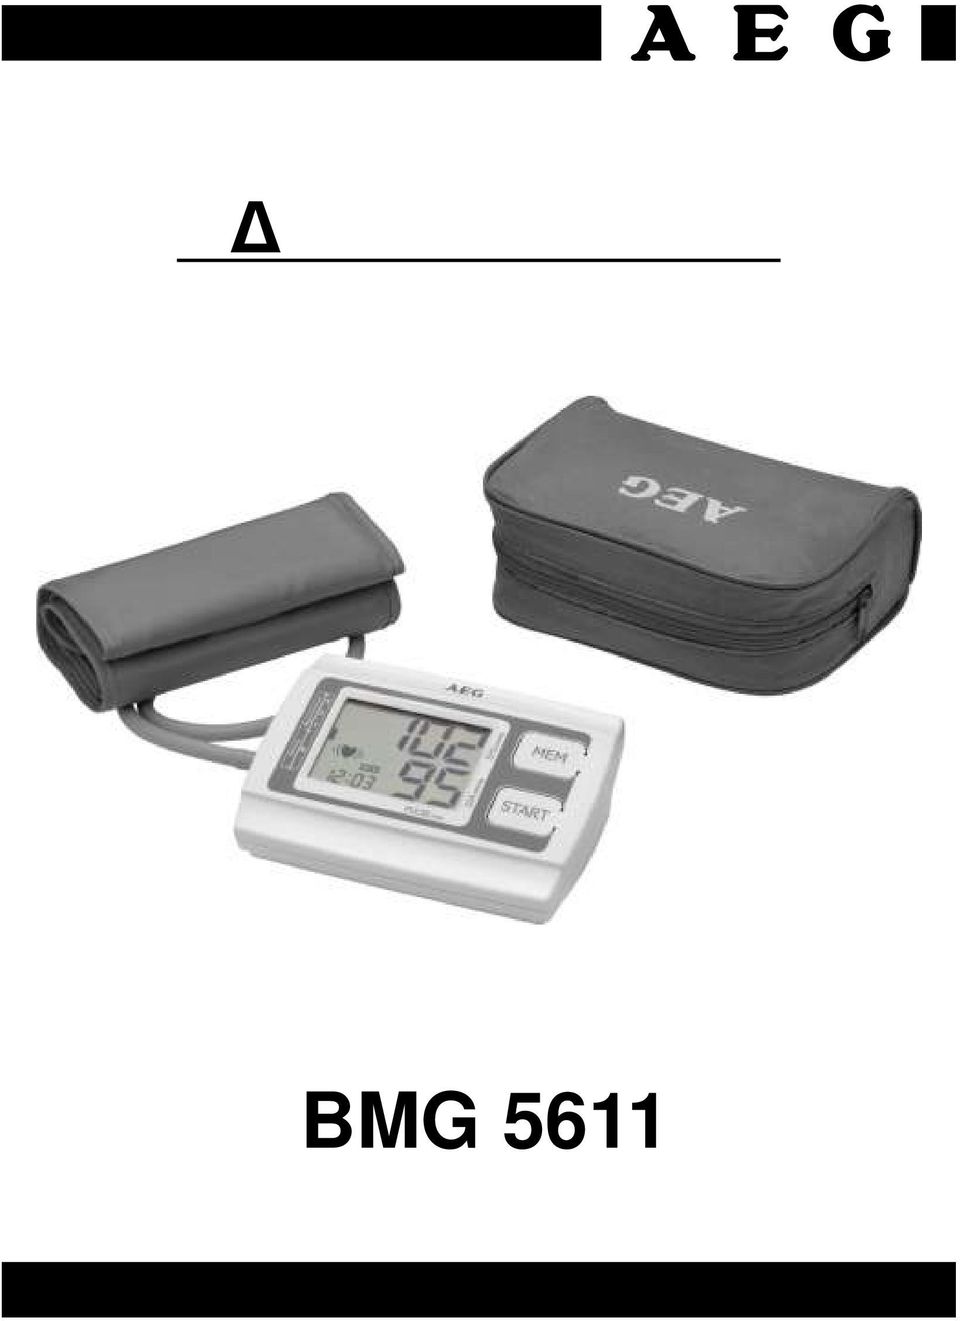 BMG 5611